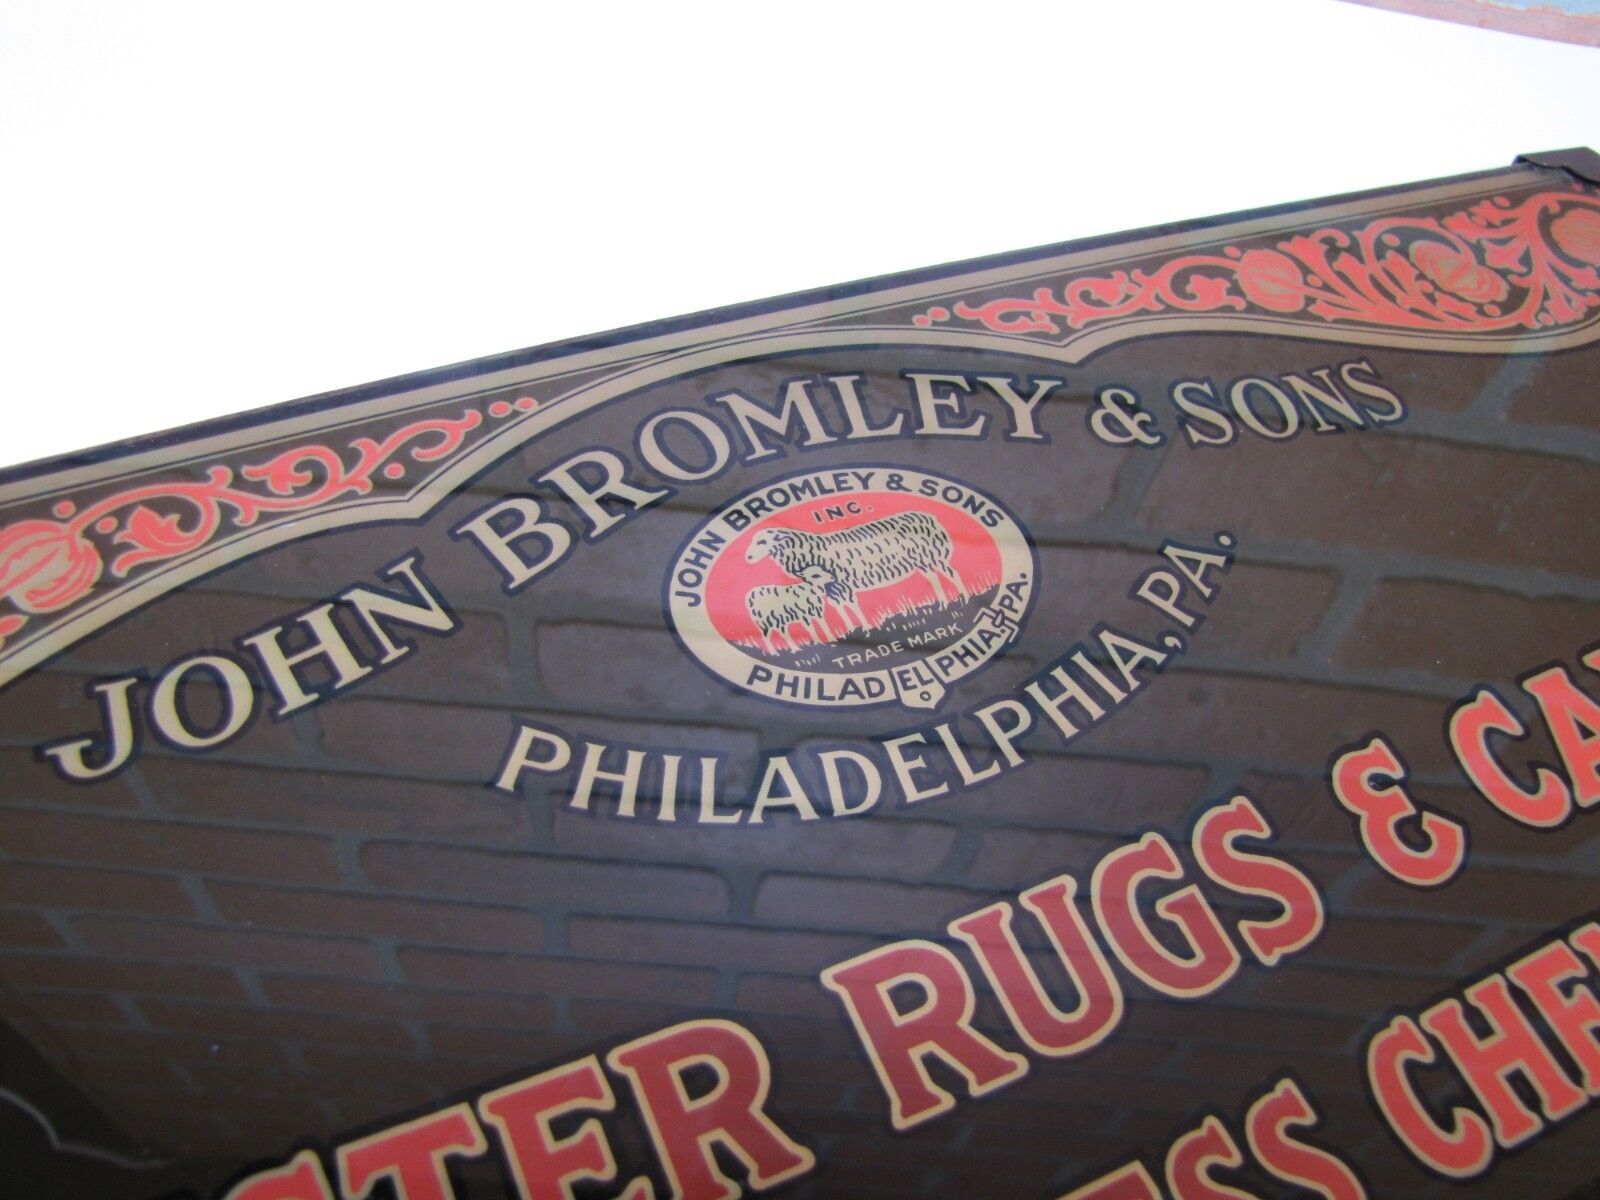 Antique JOHN BROMLEY & SONS PHILADELPHIA RUGS & CARPETS Reverse on Glass Sign